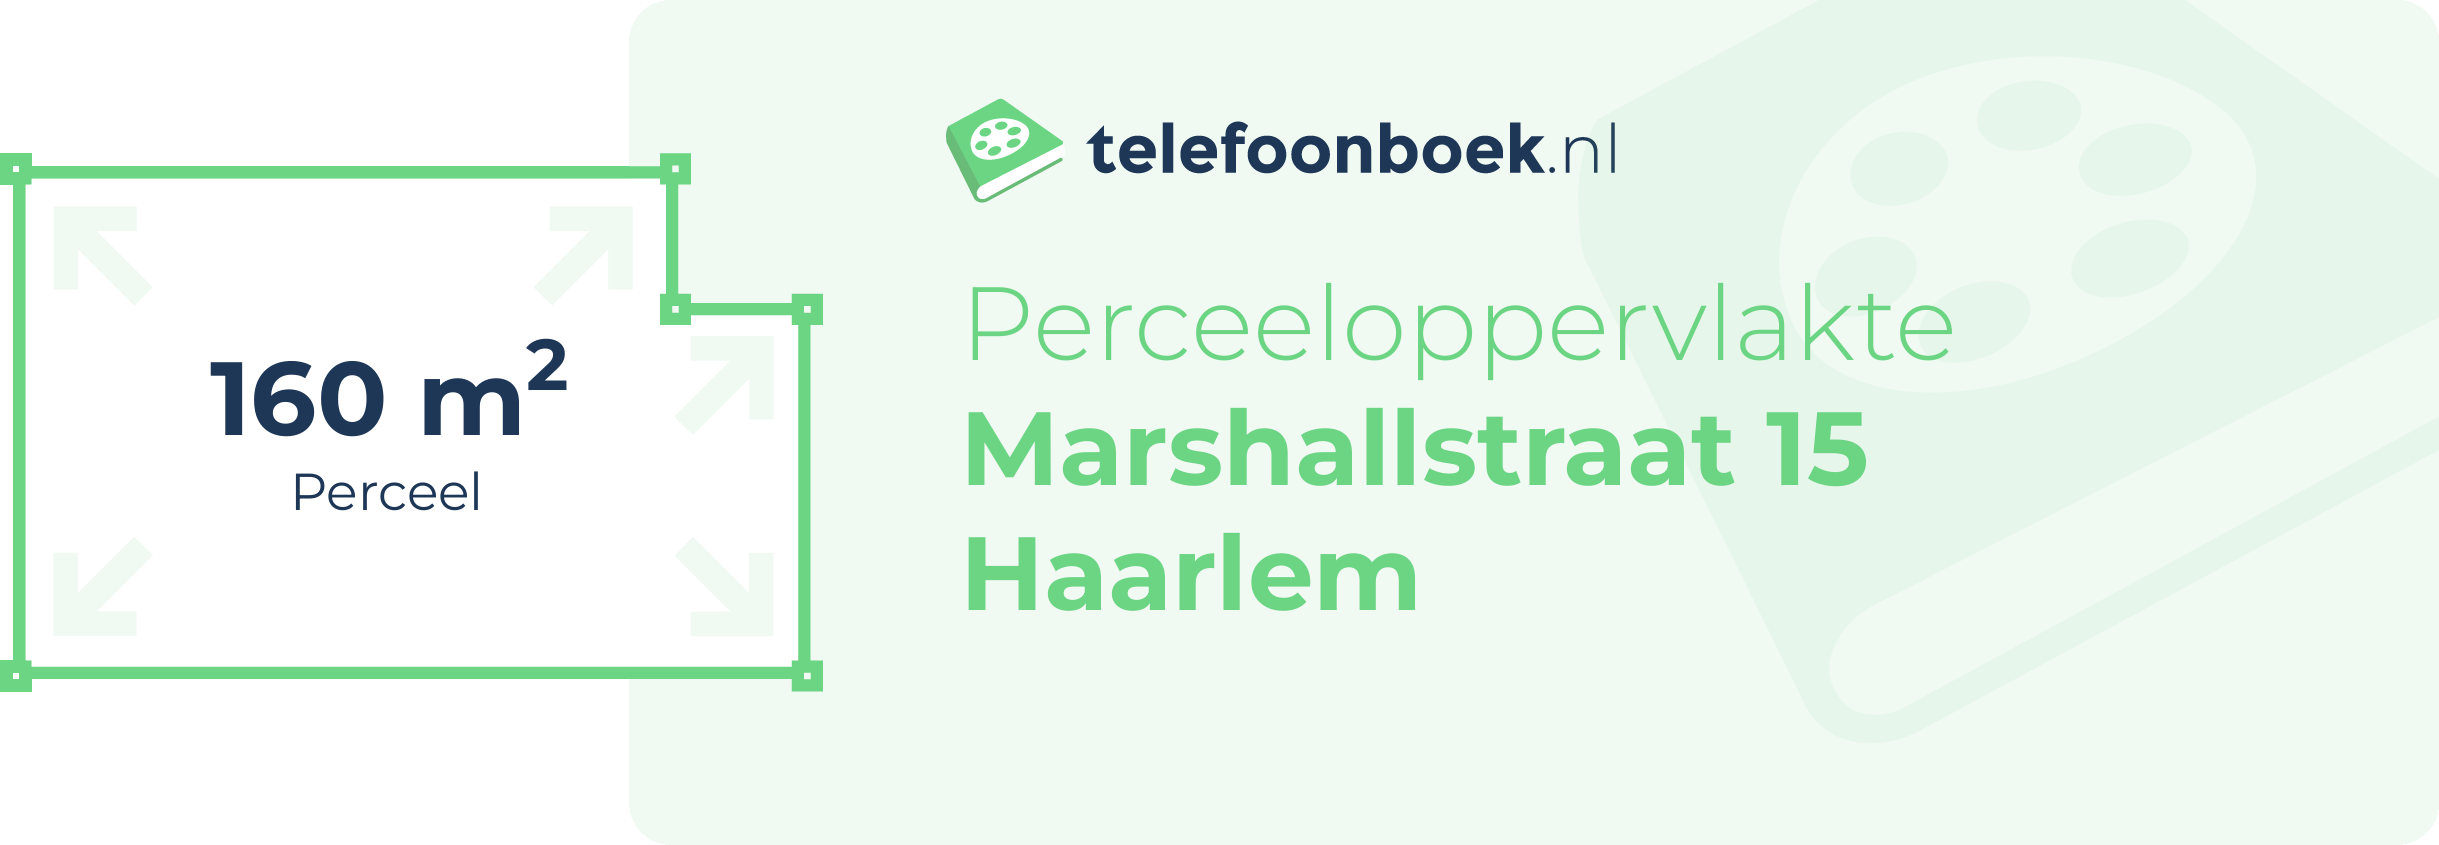 Perceeloppervlakte Marshallstraat 15 Haarlem